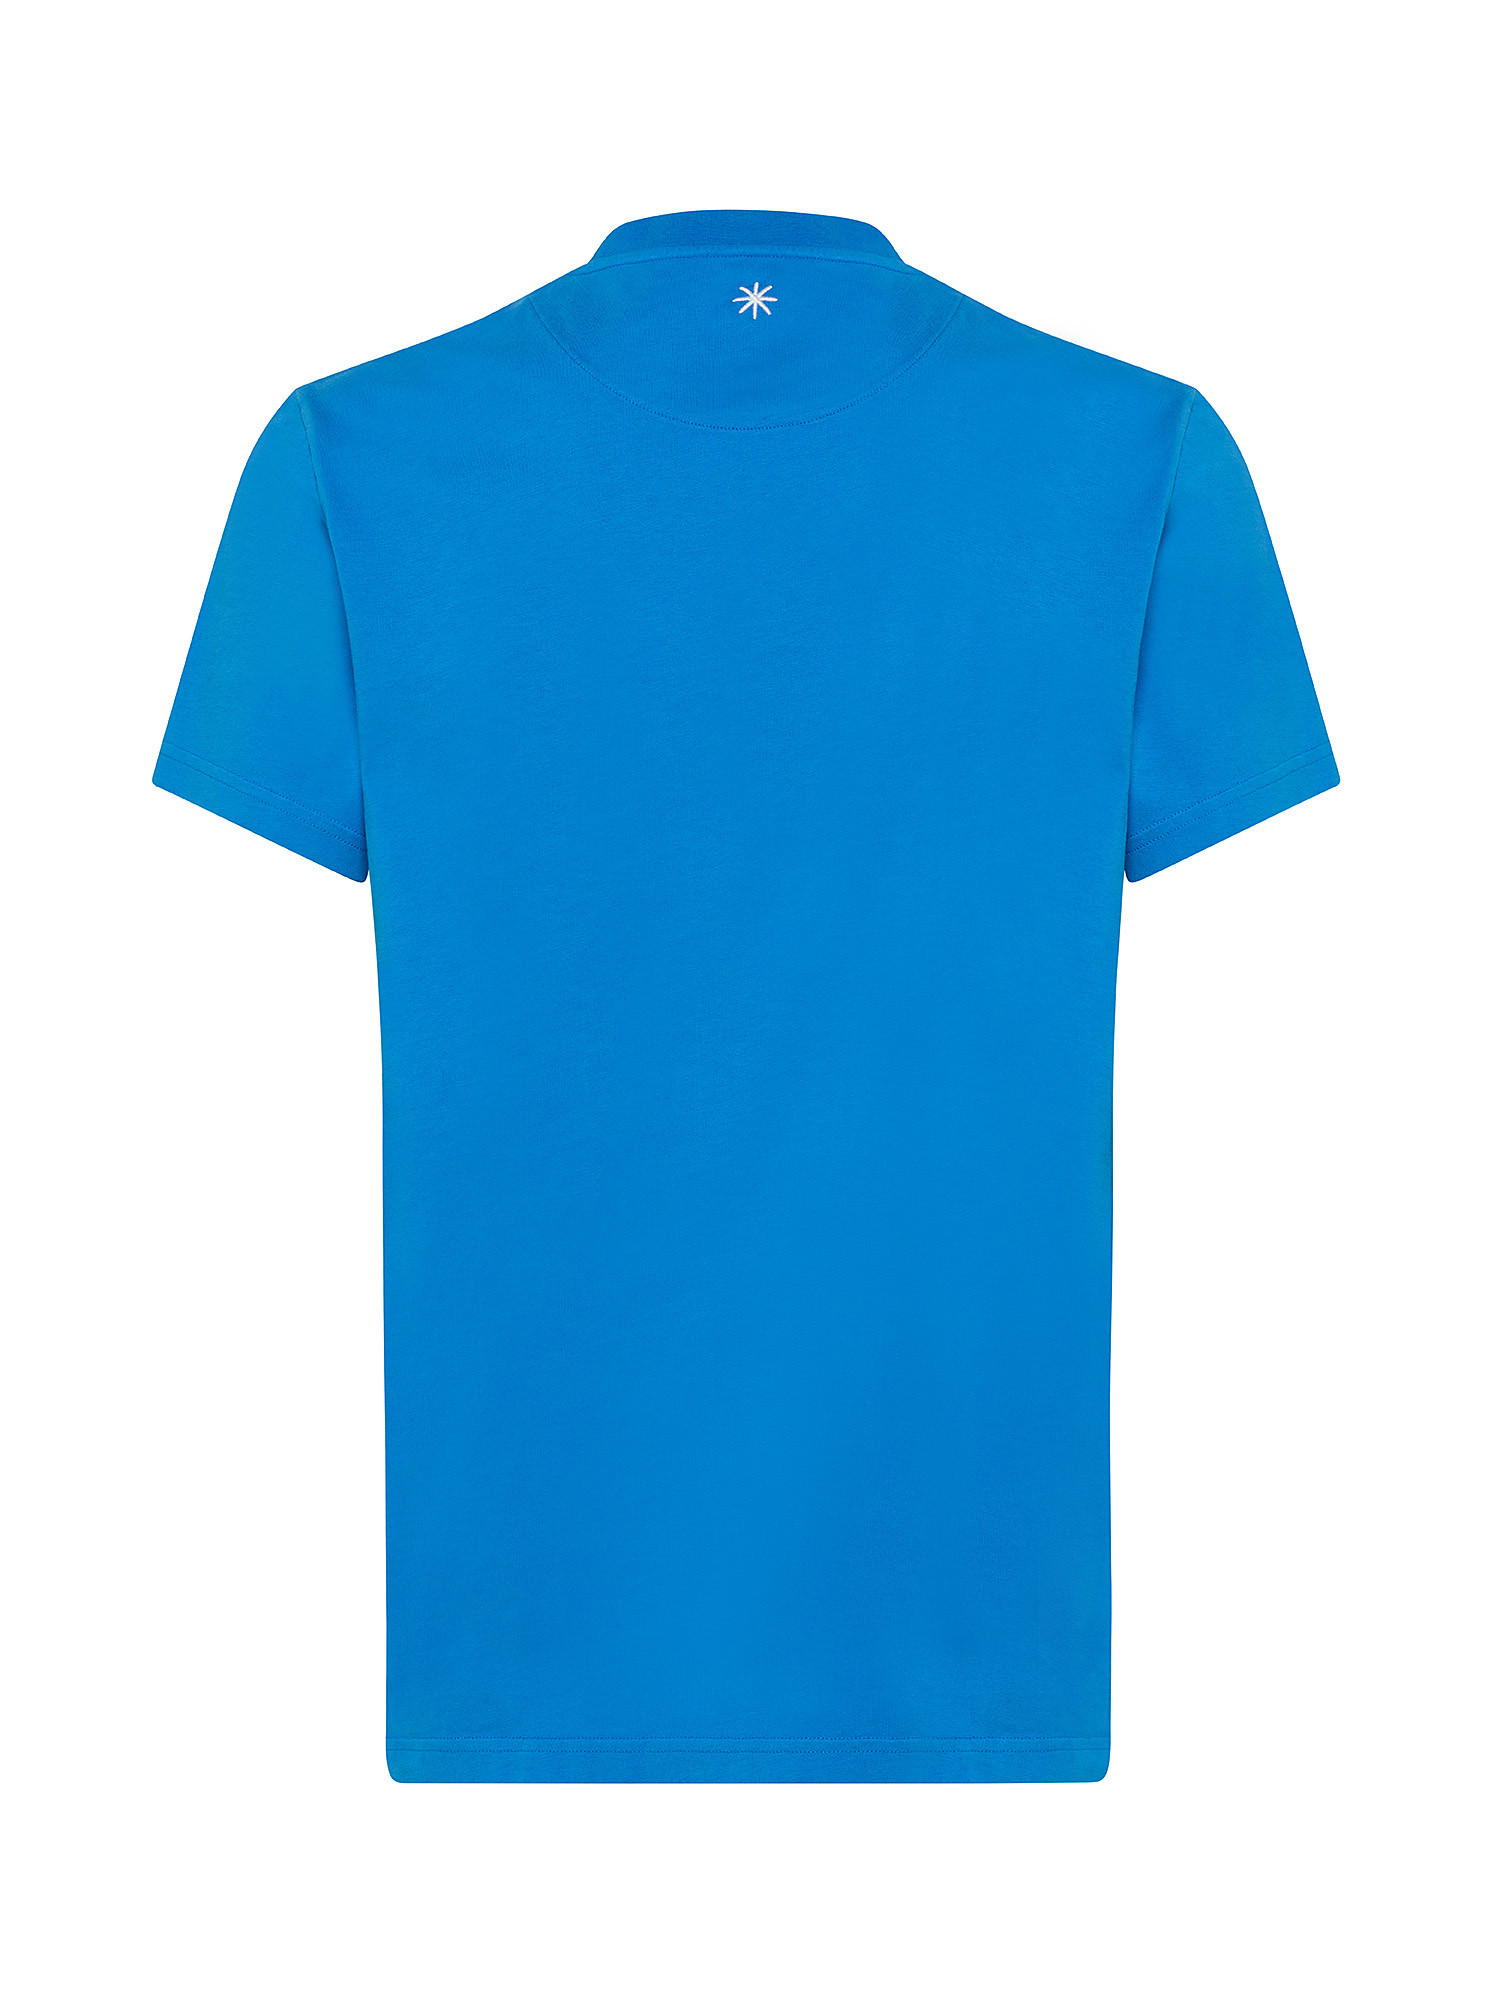 Manuel Ritz - T-shirt in cotone, Blu, large image number 1